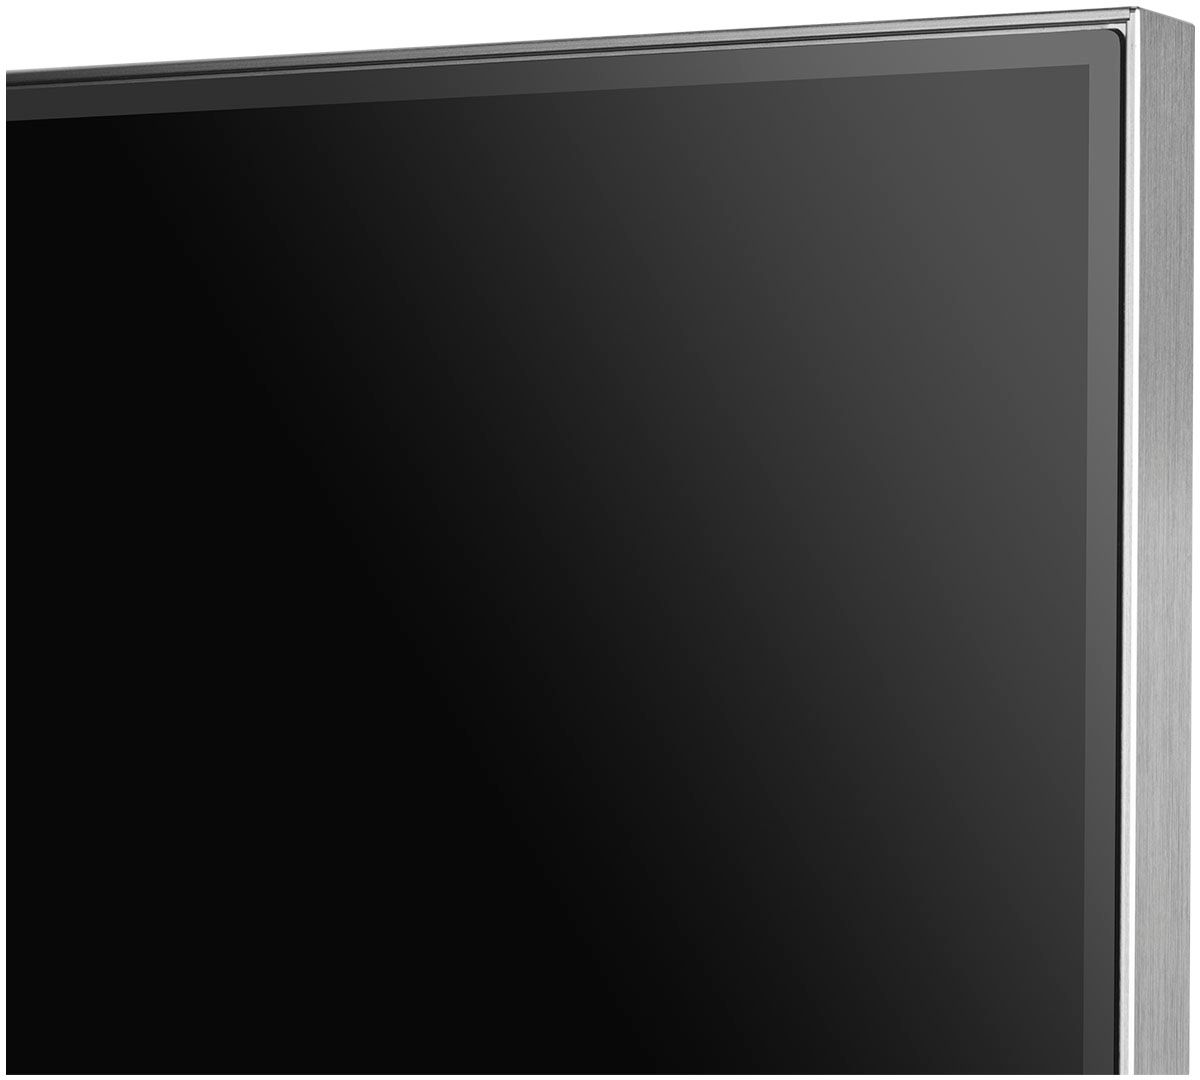 Dolby 55R635 4K UHD 55” Mini-LED Roku QLED Buy: HDR Class 6-Series Vision TCL Smart TV Best